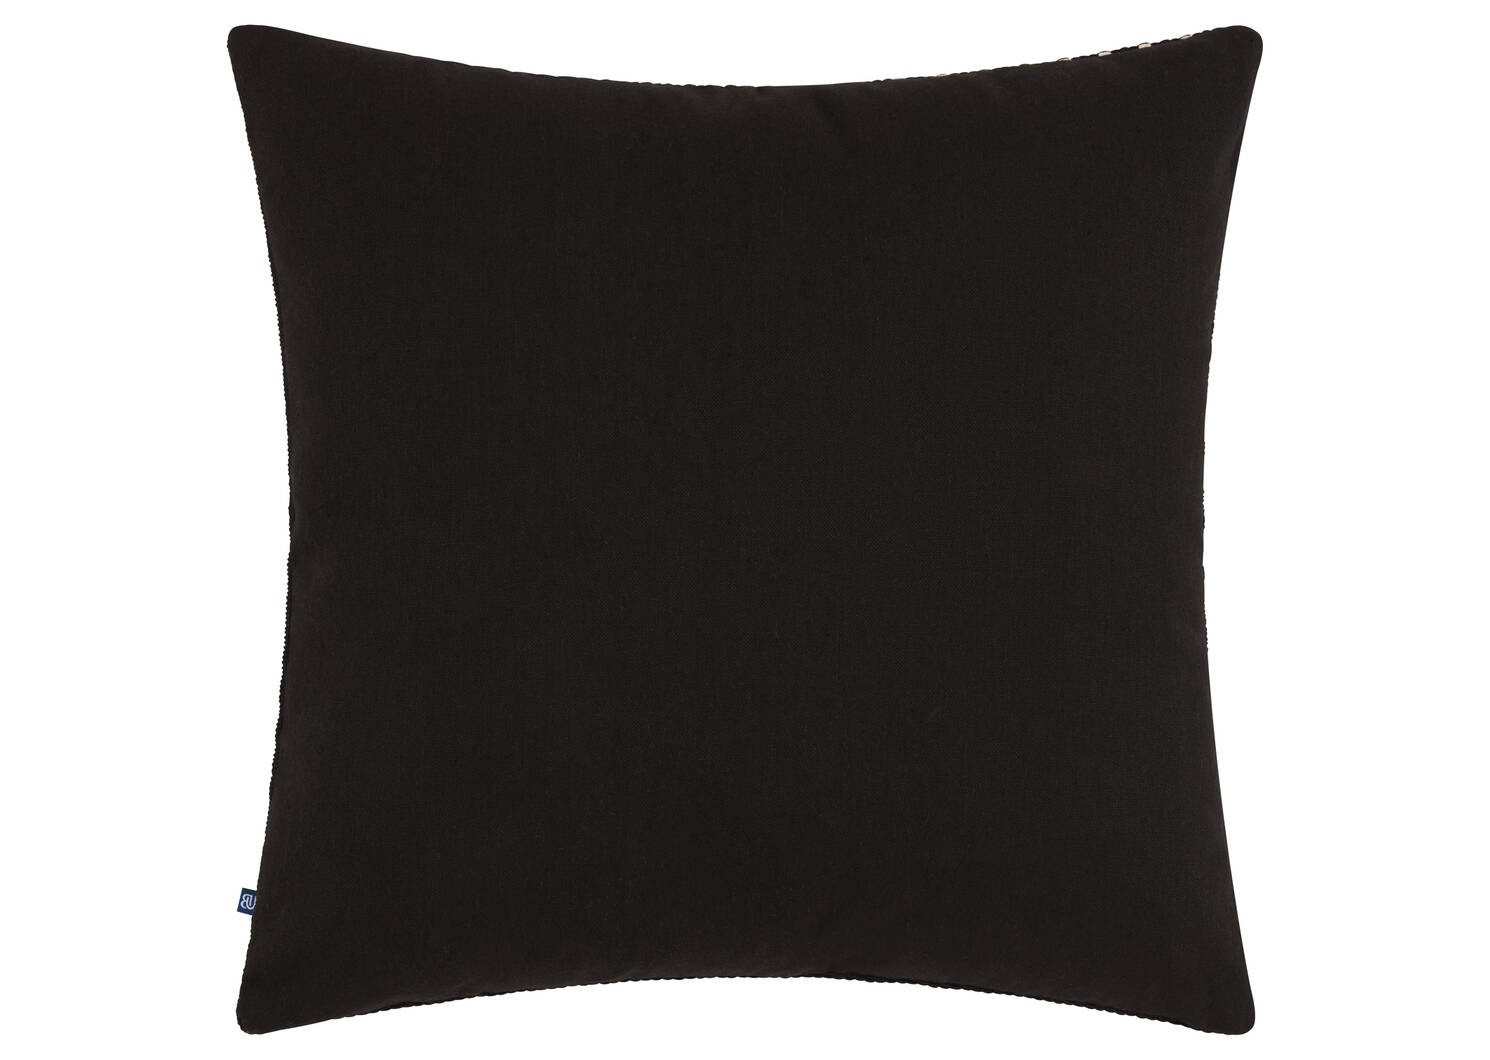 Veneta Pillow 20x20 Black/Natural